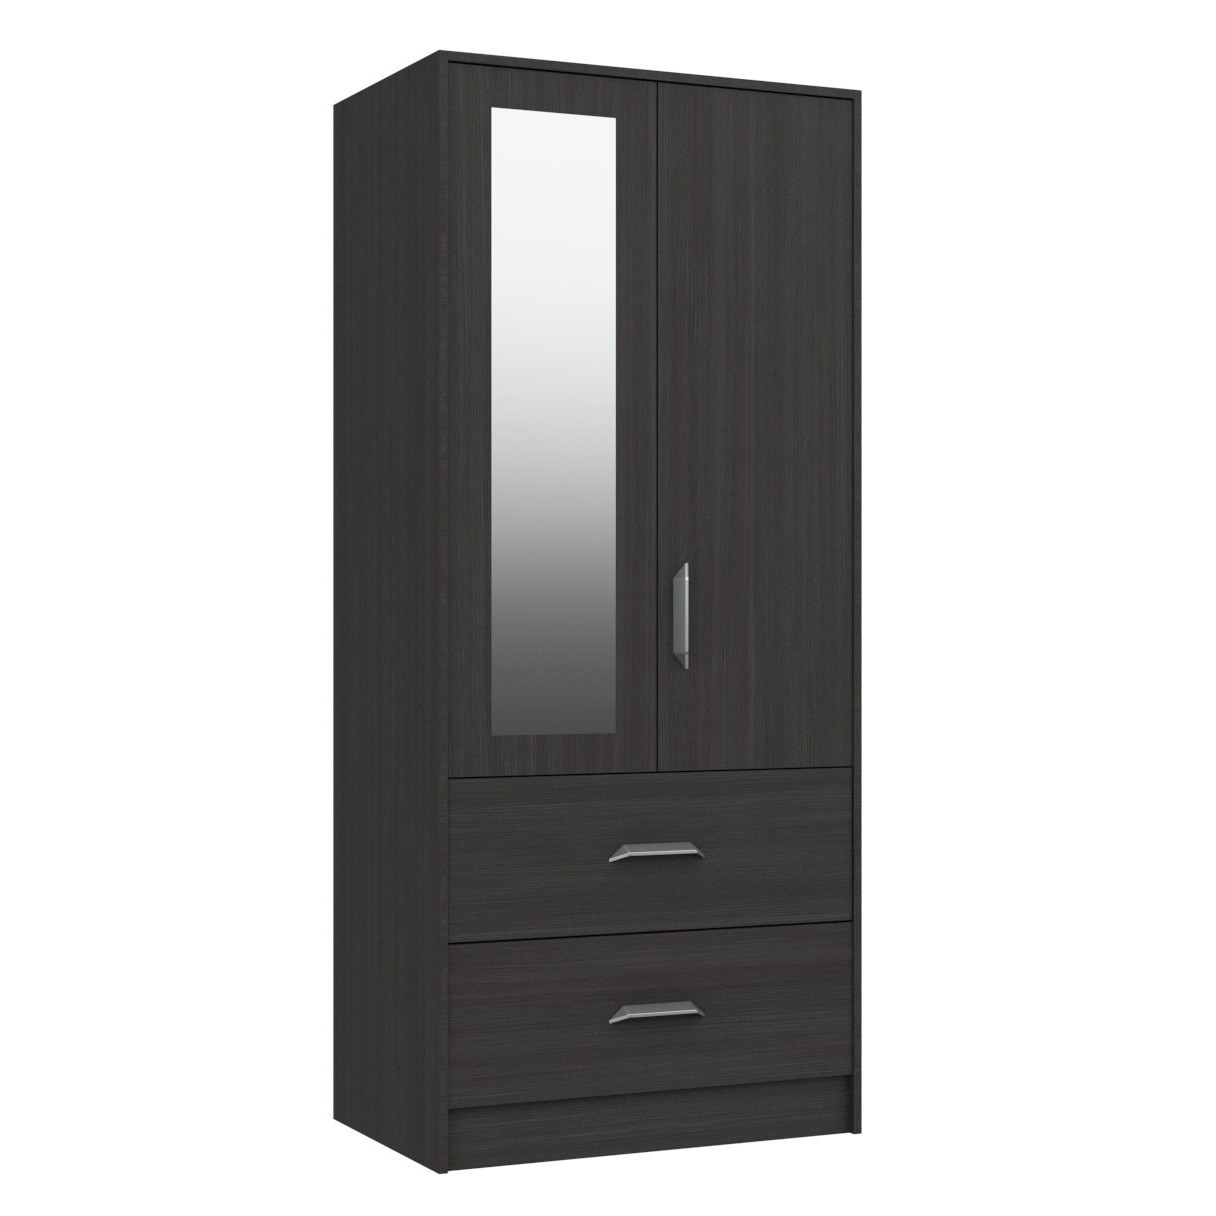 Ashdown 2 Door 2 Drawer Mirror Wardrobe - Dark Grey - image 1